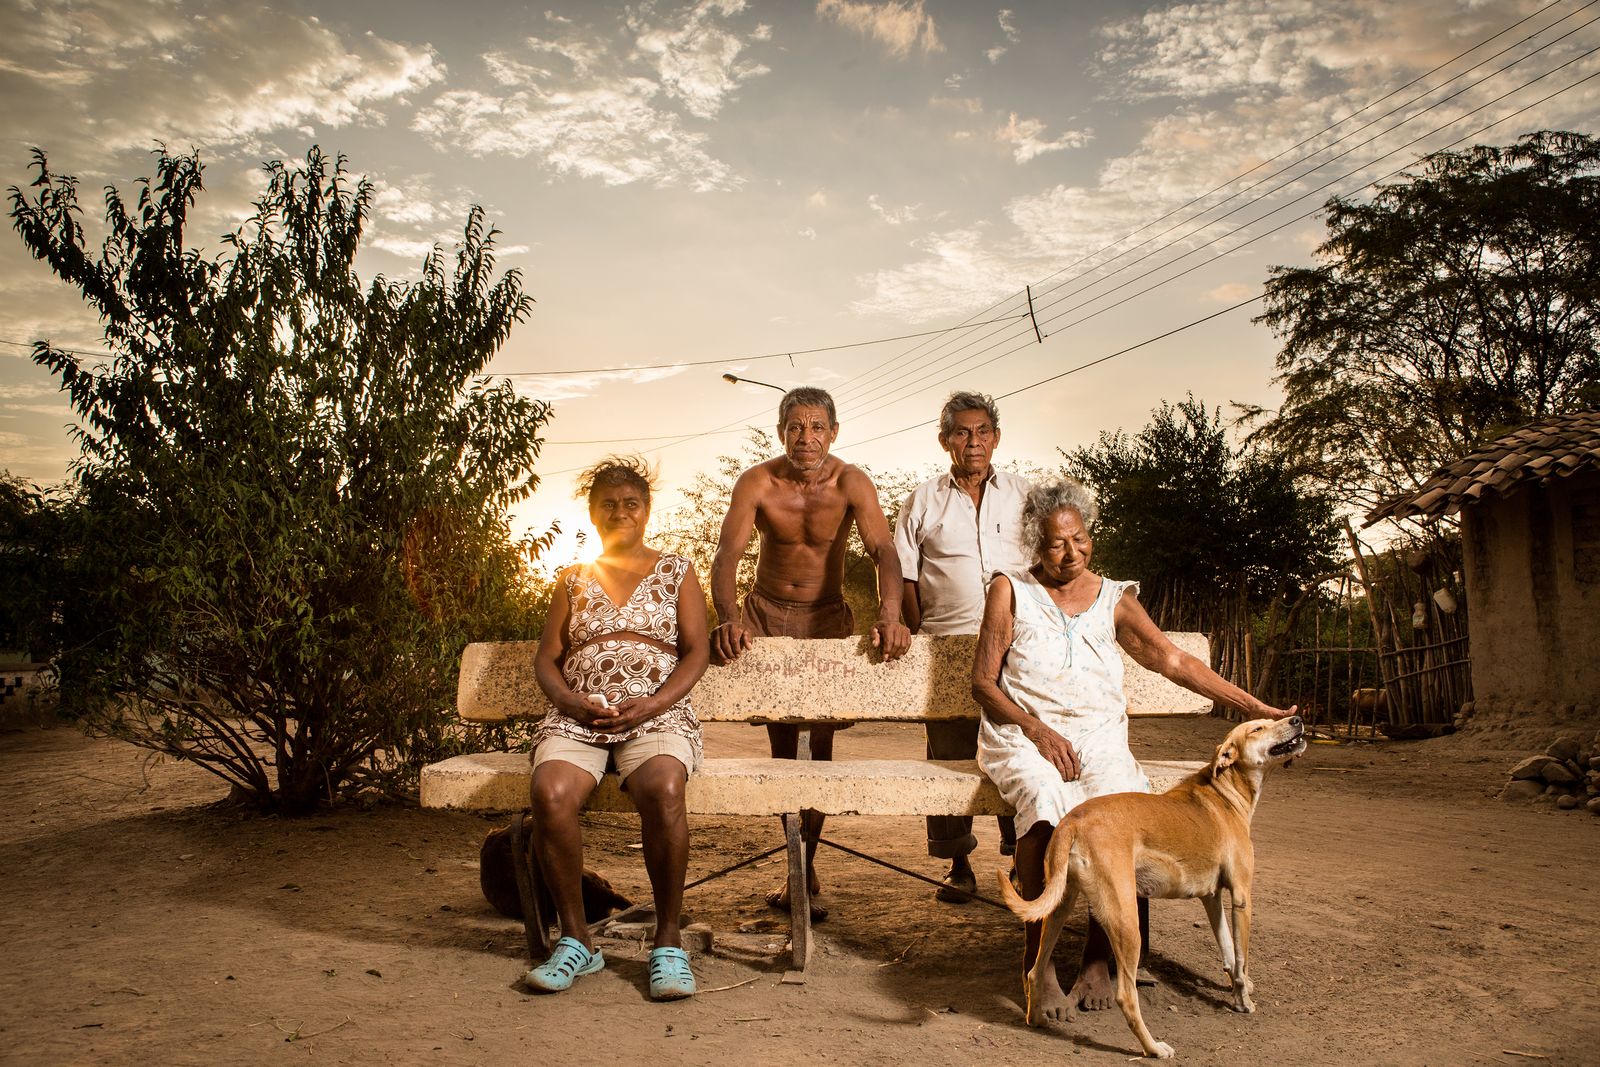 © Liz Tasa - Image from the Yapatera, descendientes de la esclavitud photography project